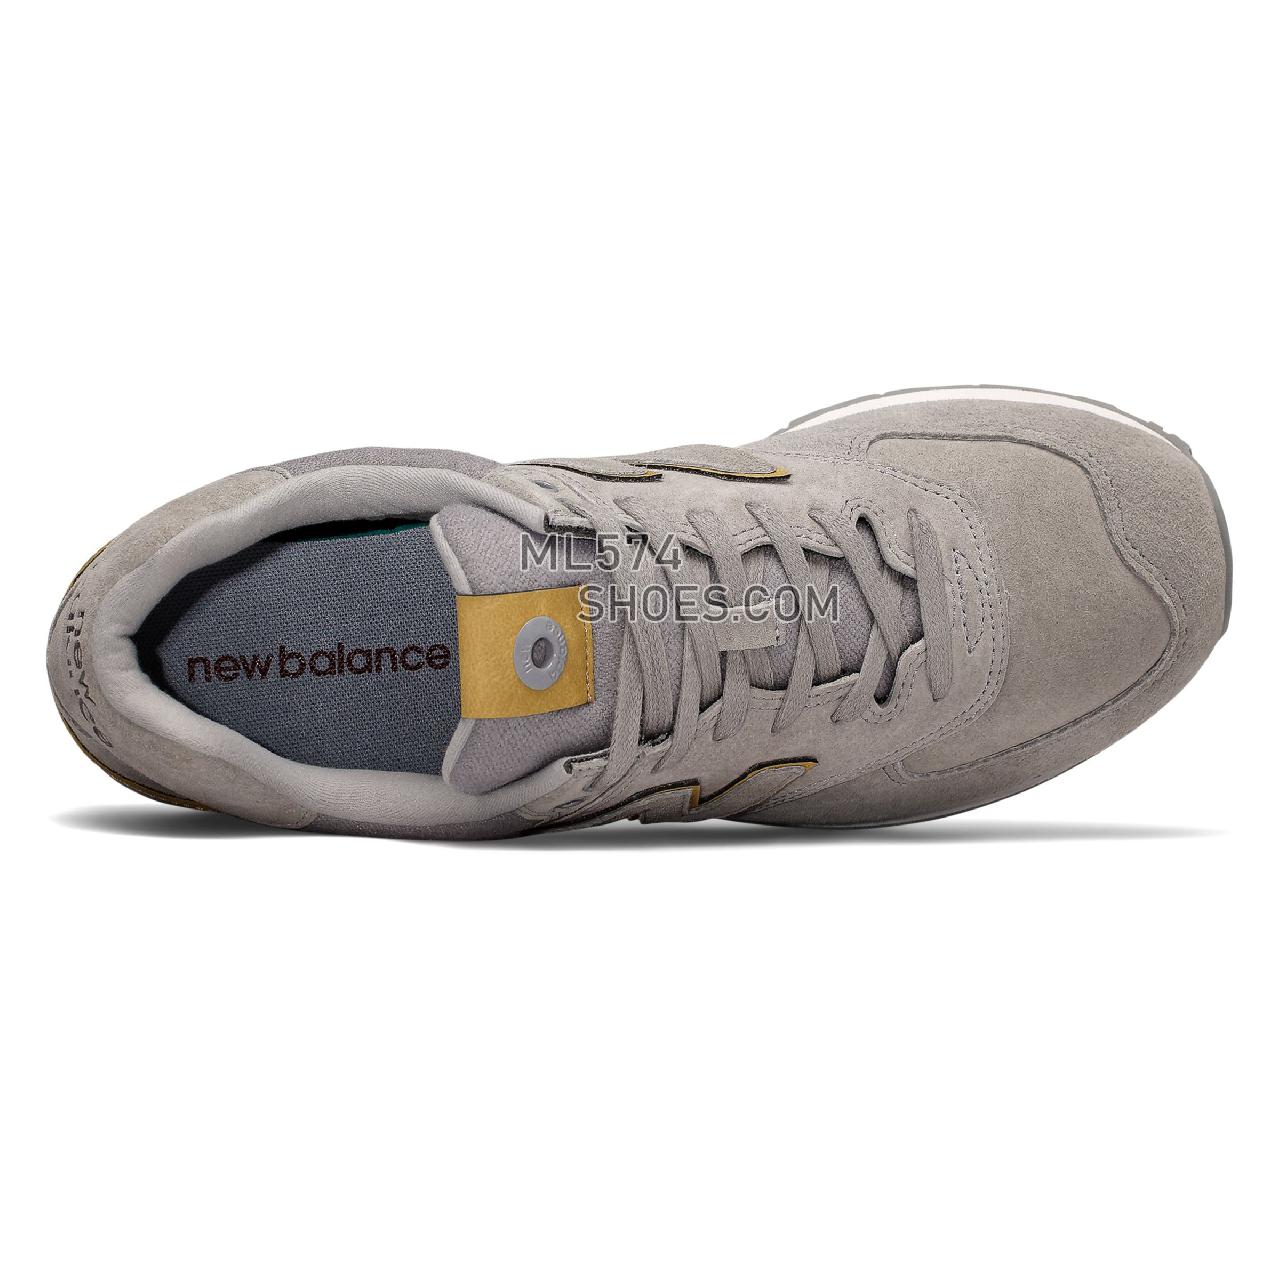 New Balance 574 - Men's Classic Sneakers - Marblehead with Goldrush - ML574JFD